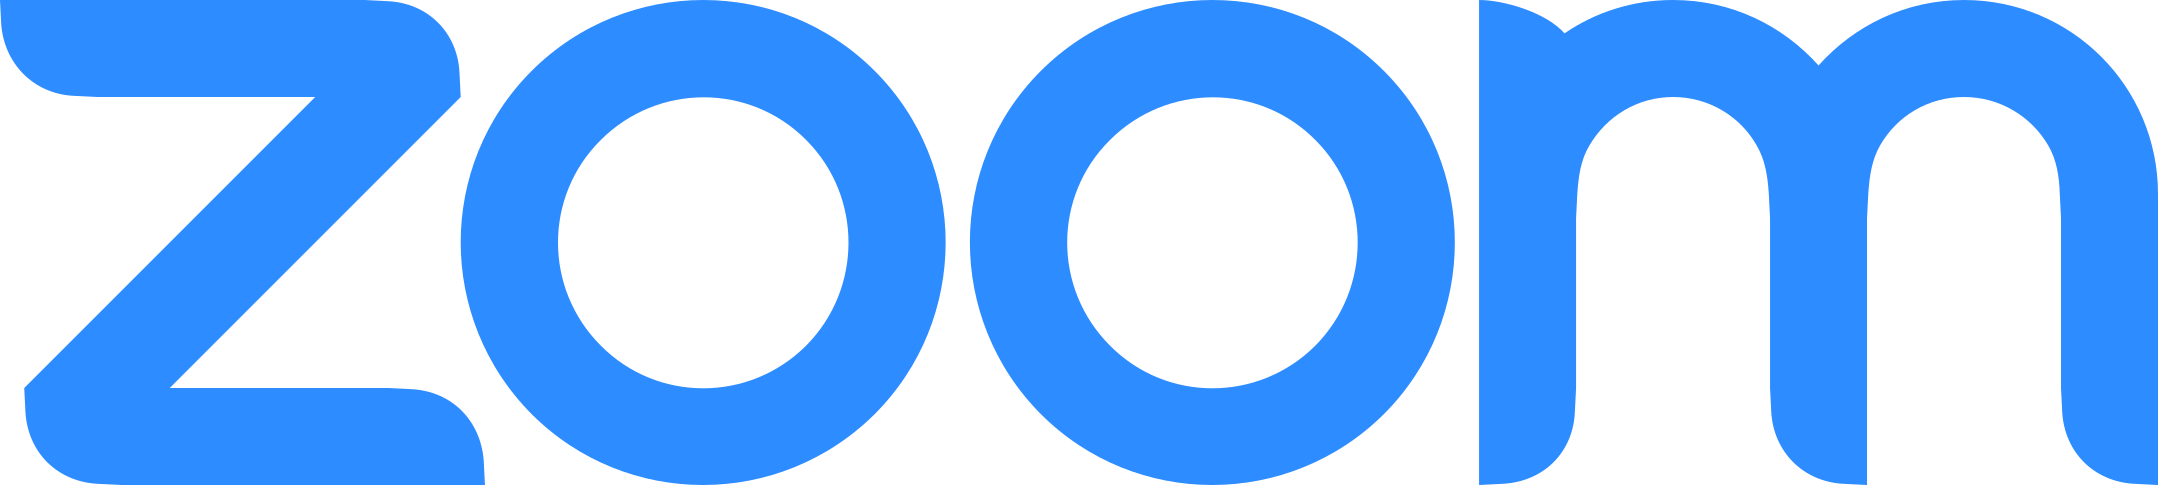 zoom-logo-1